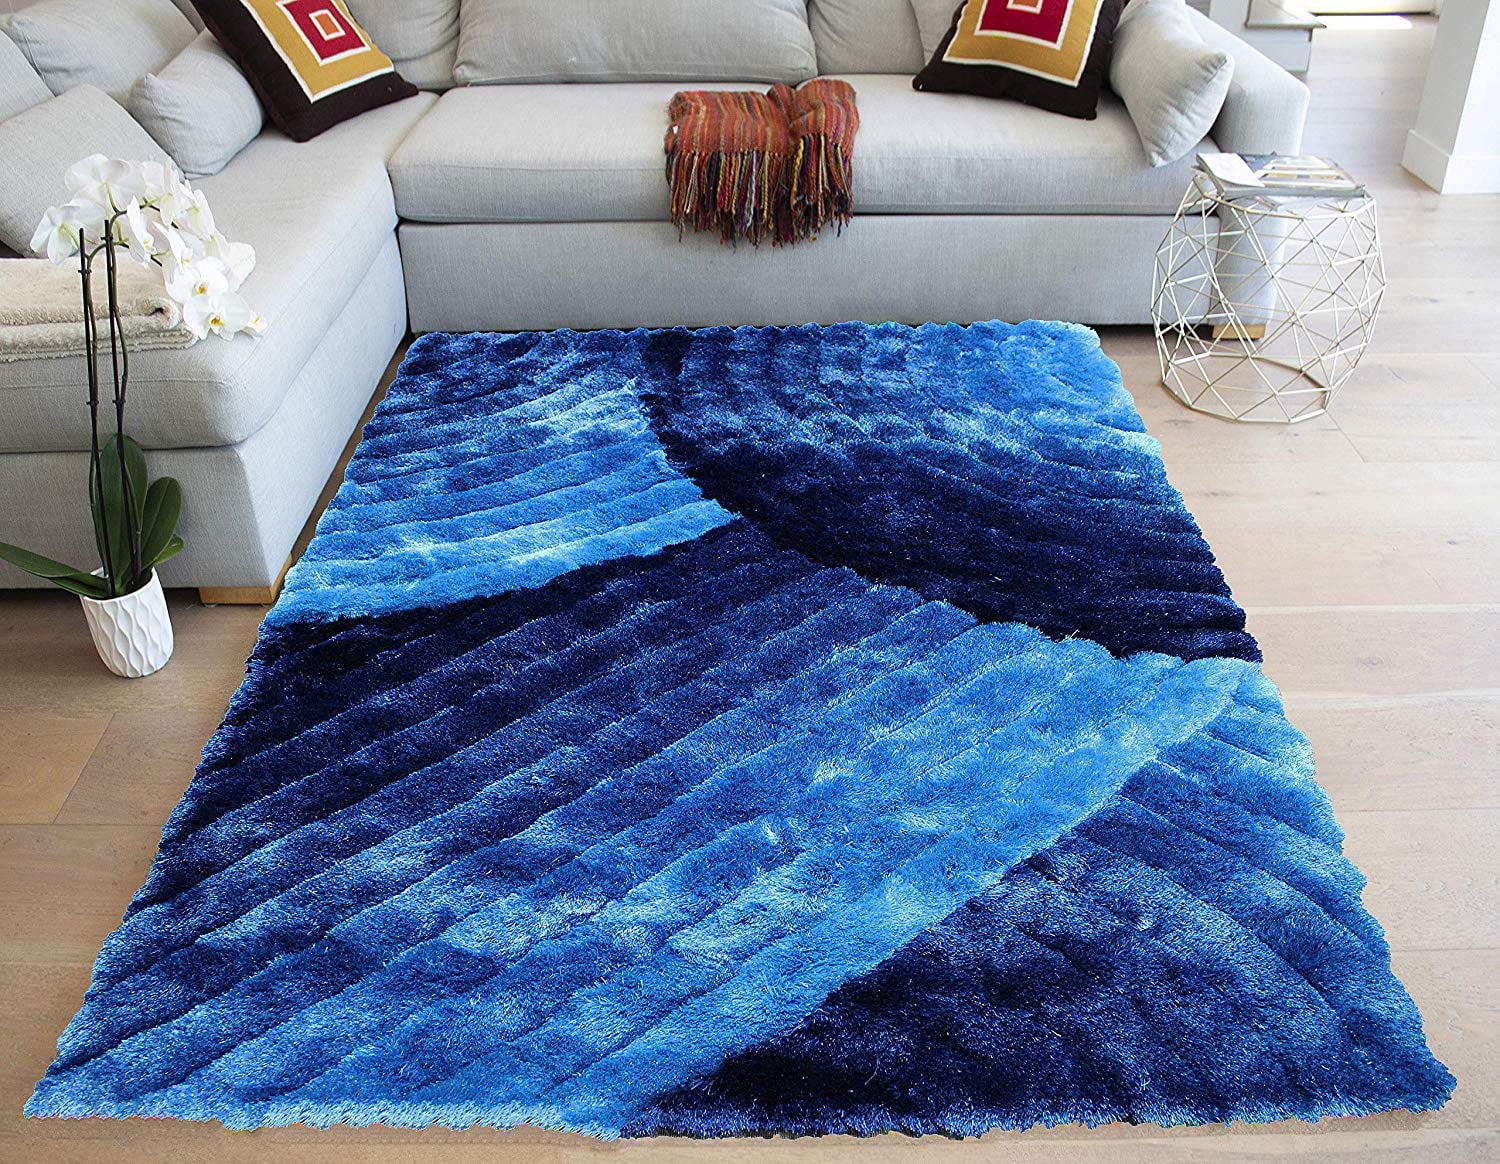 shaggy carpet for living room